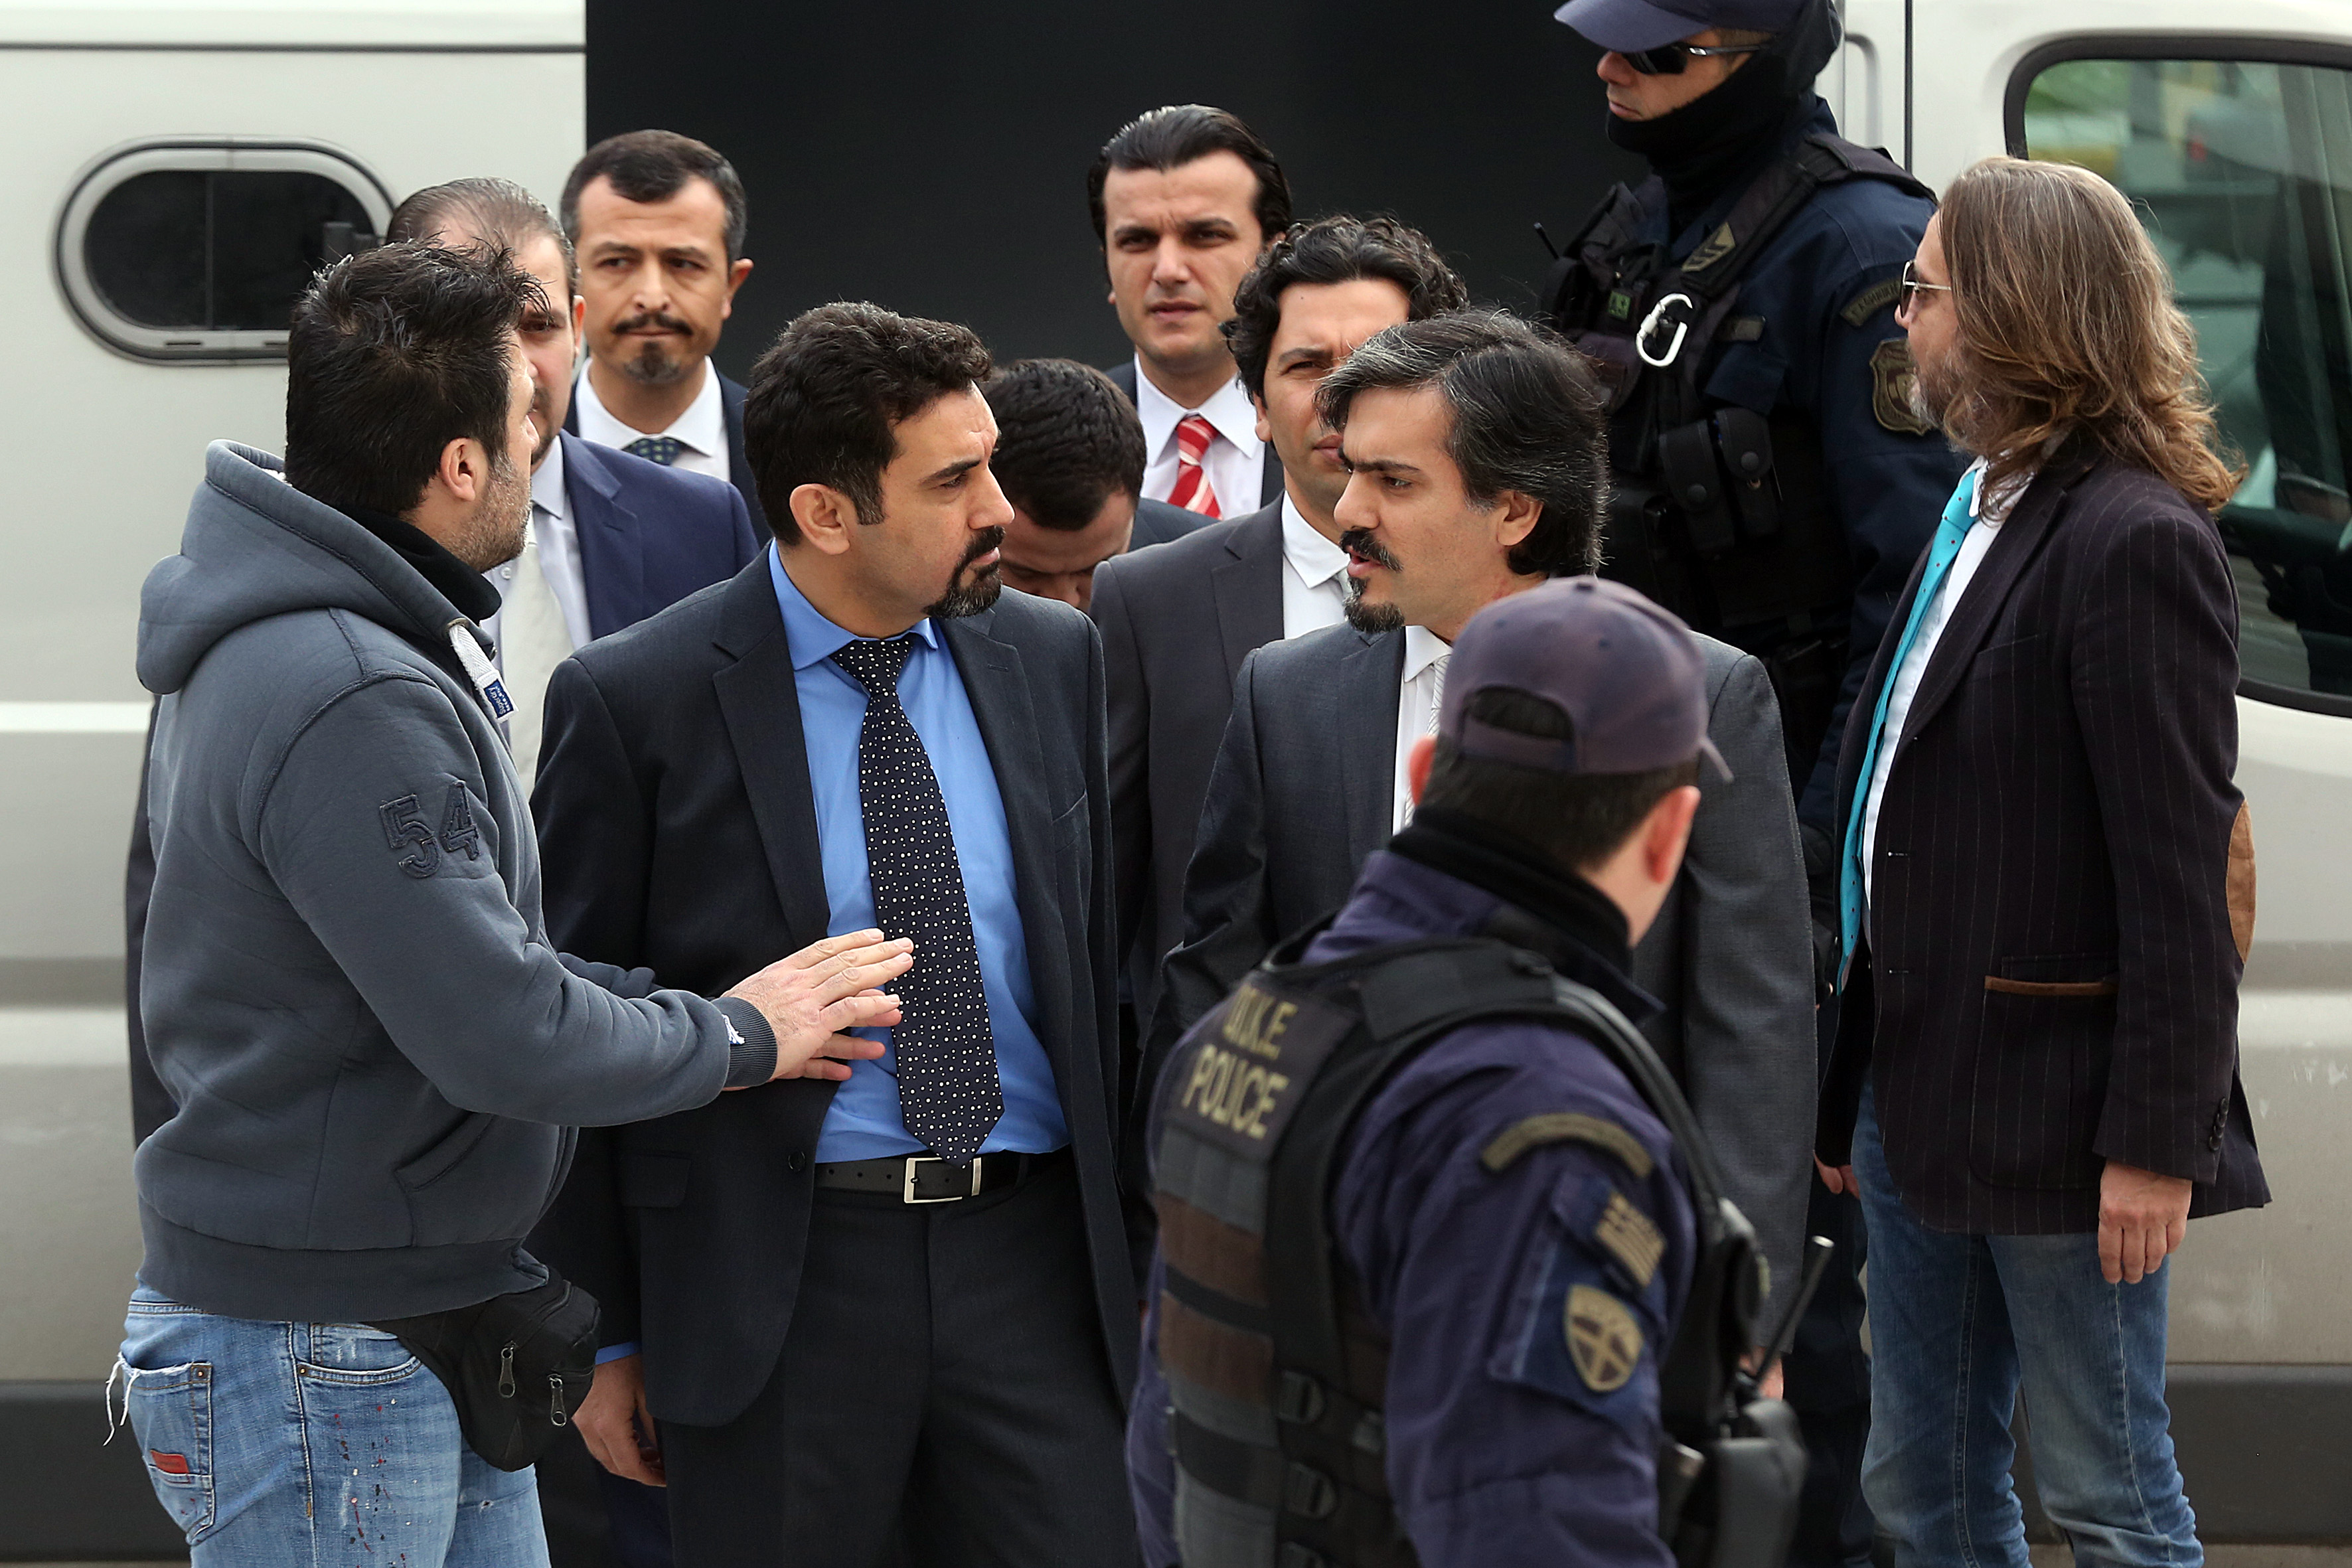 Asylum application of Turkish officer of Kurdish descent a J’accuse! against Erdogan